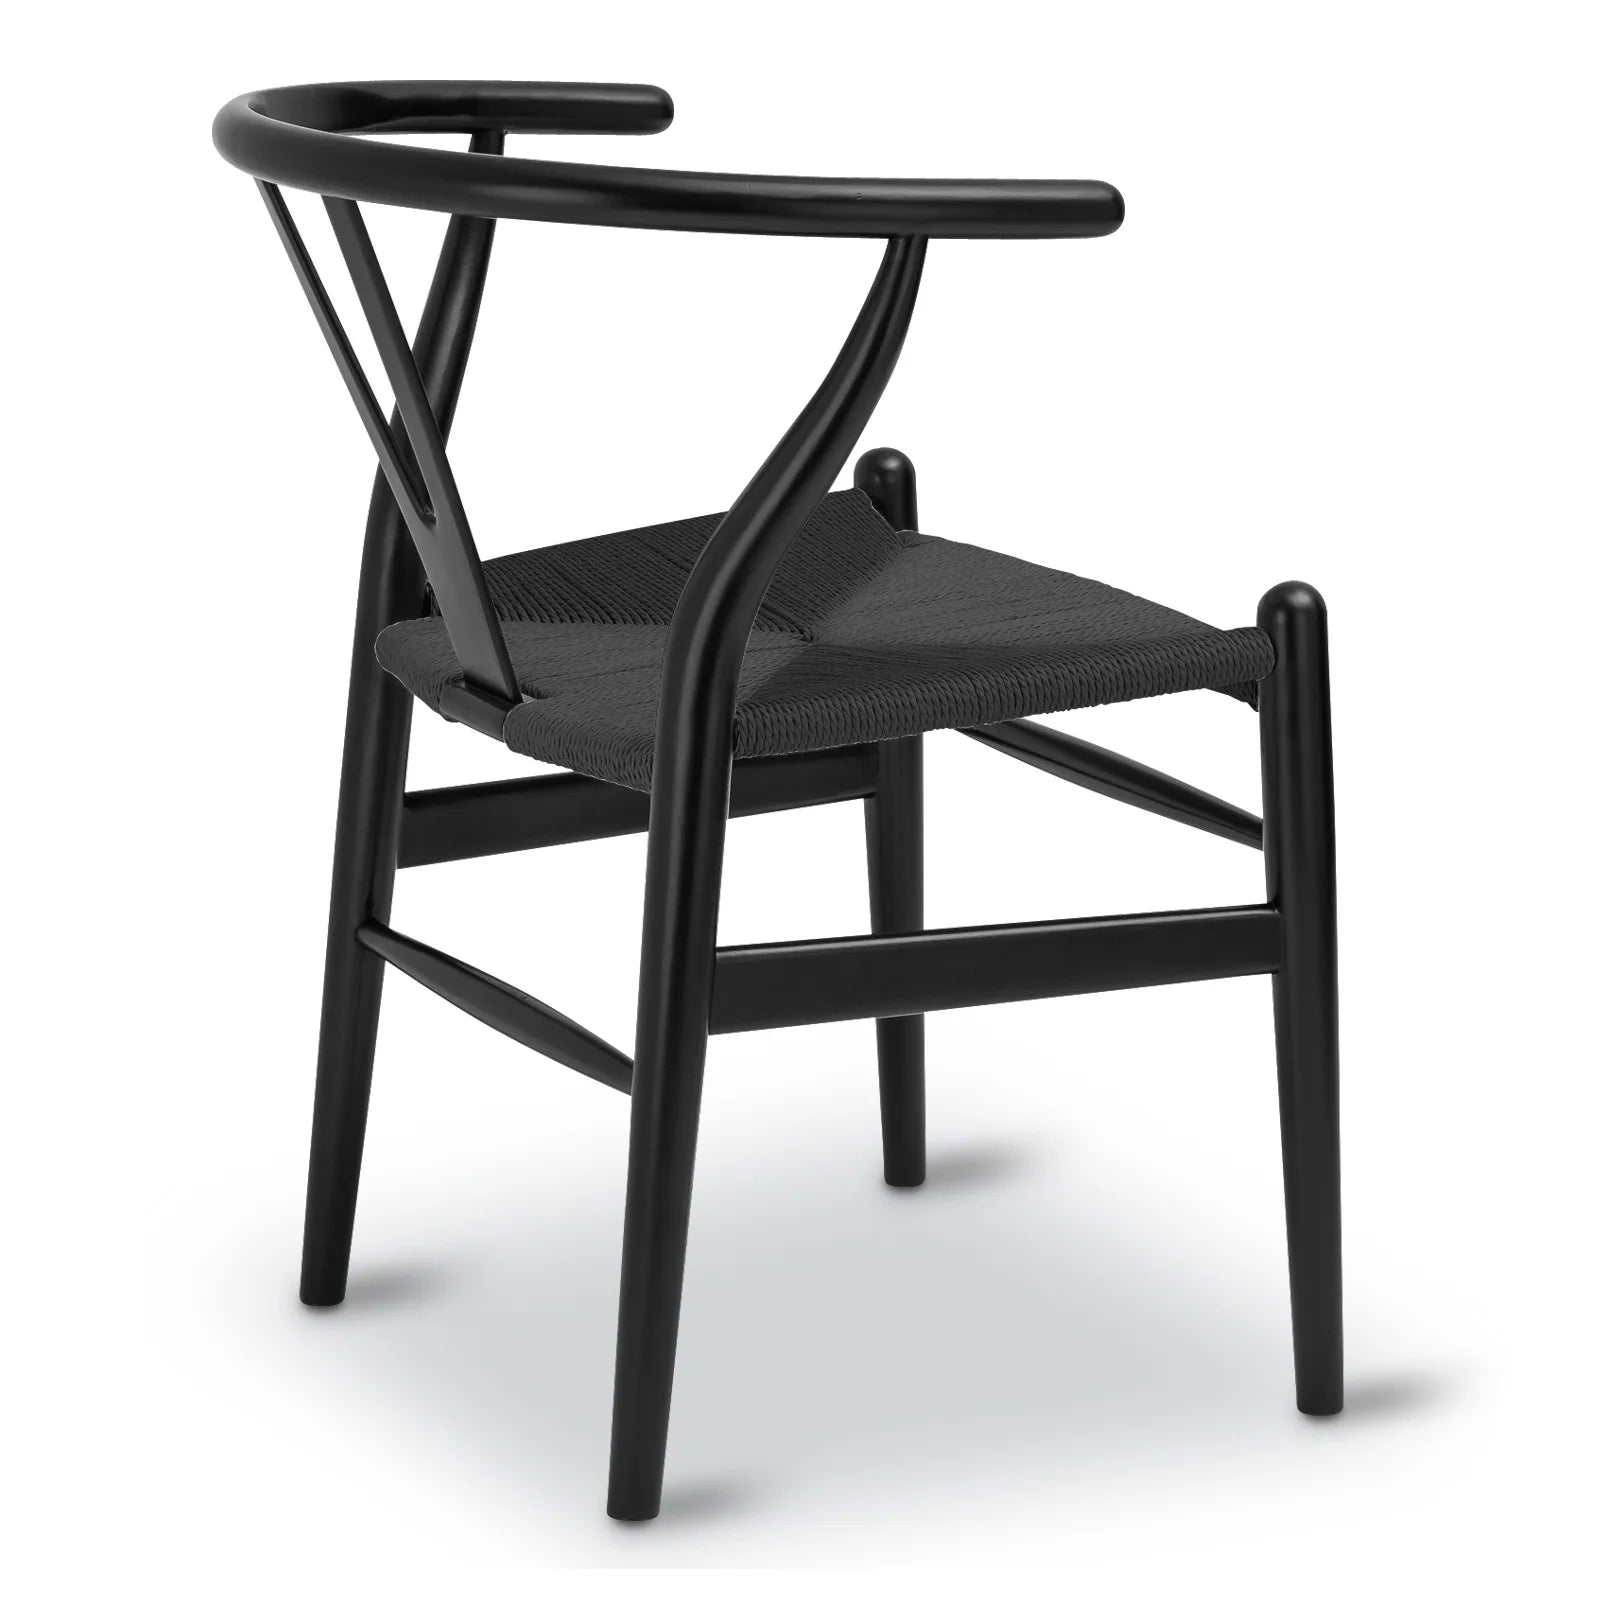 Wishbone Dining Chair